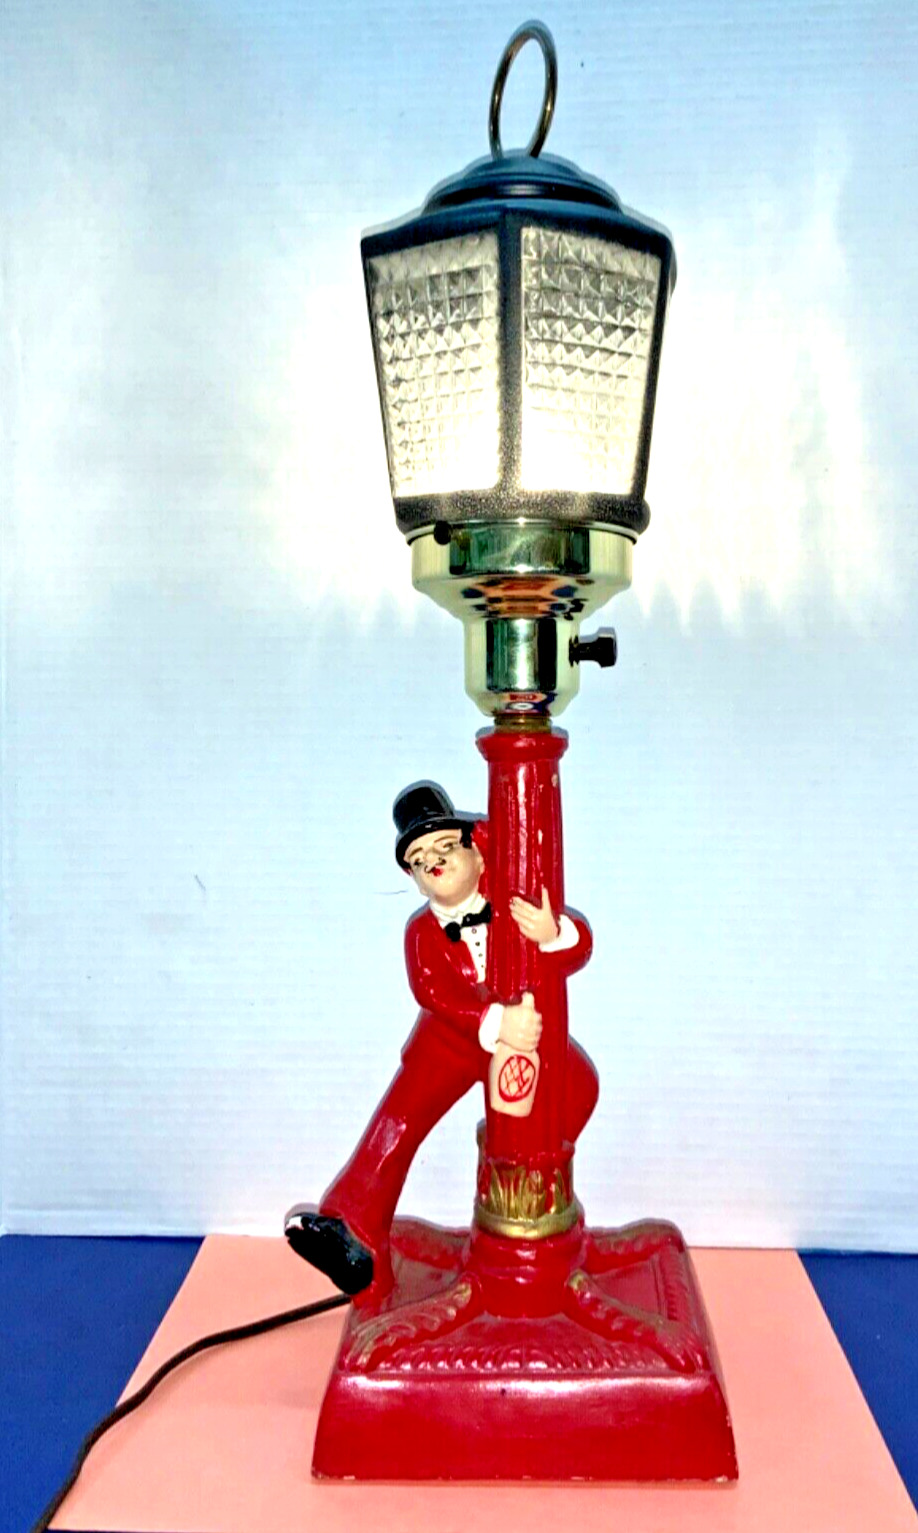 Vintage Tabletop Drunk Hobo Lamp Post Barware Lamp - RED & GOLD - WORKING